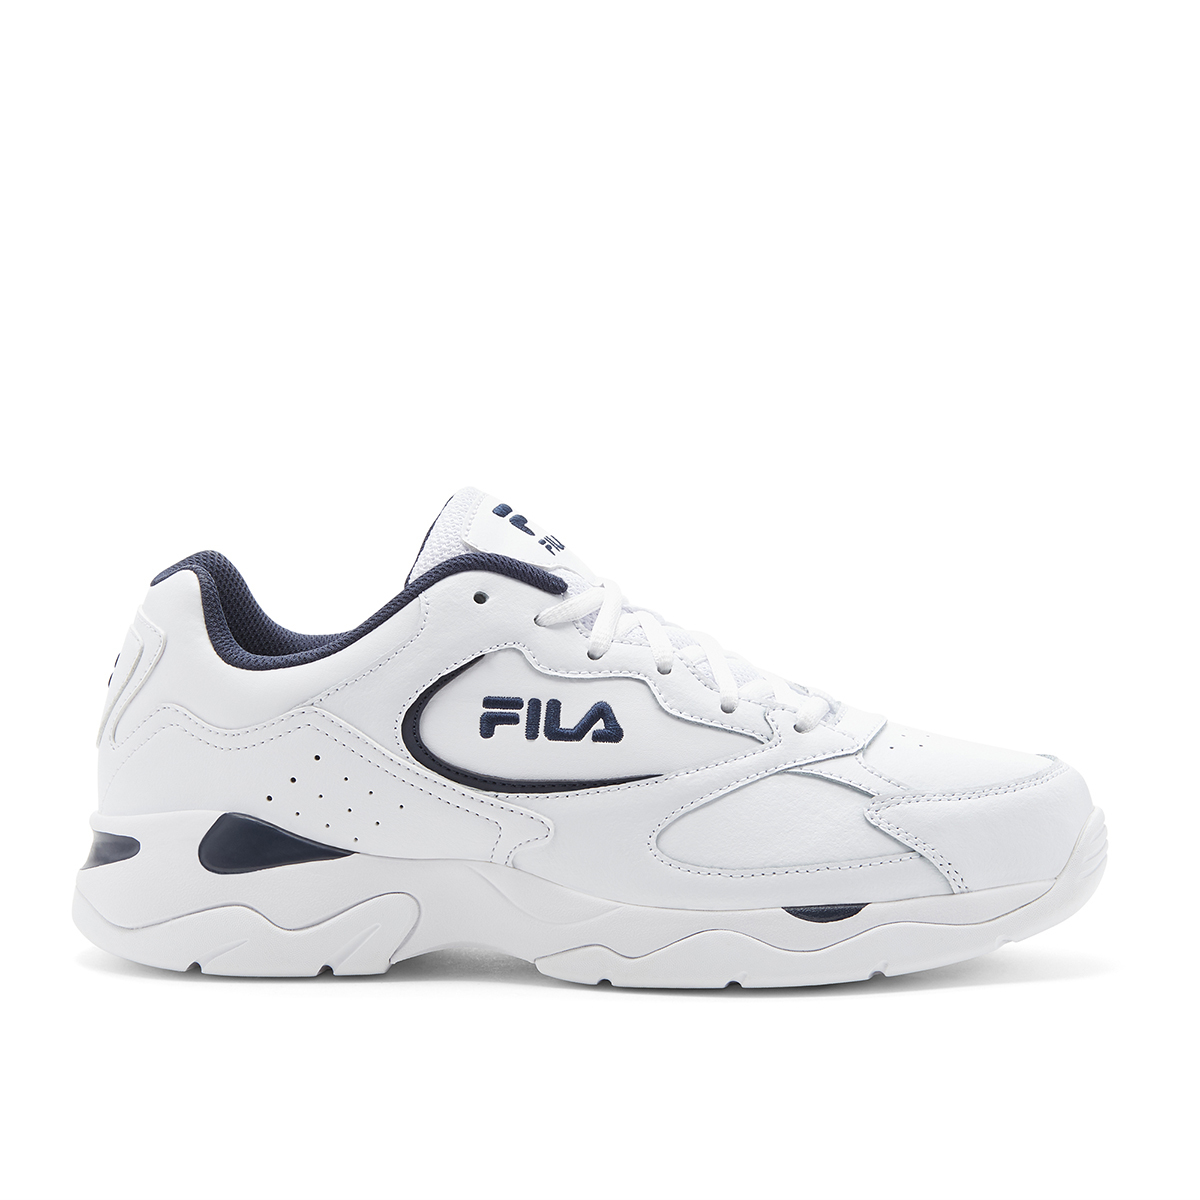 Fila Tri Runner Men's Athletic Shoes in 